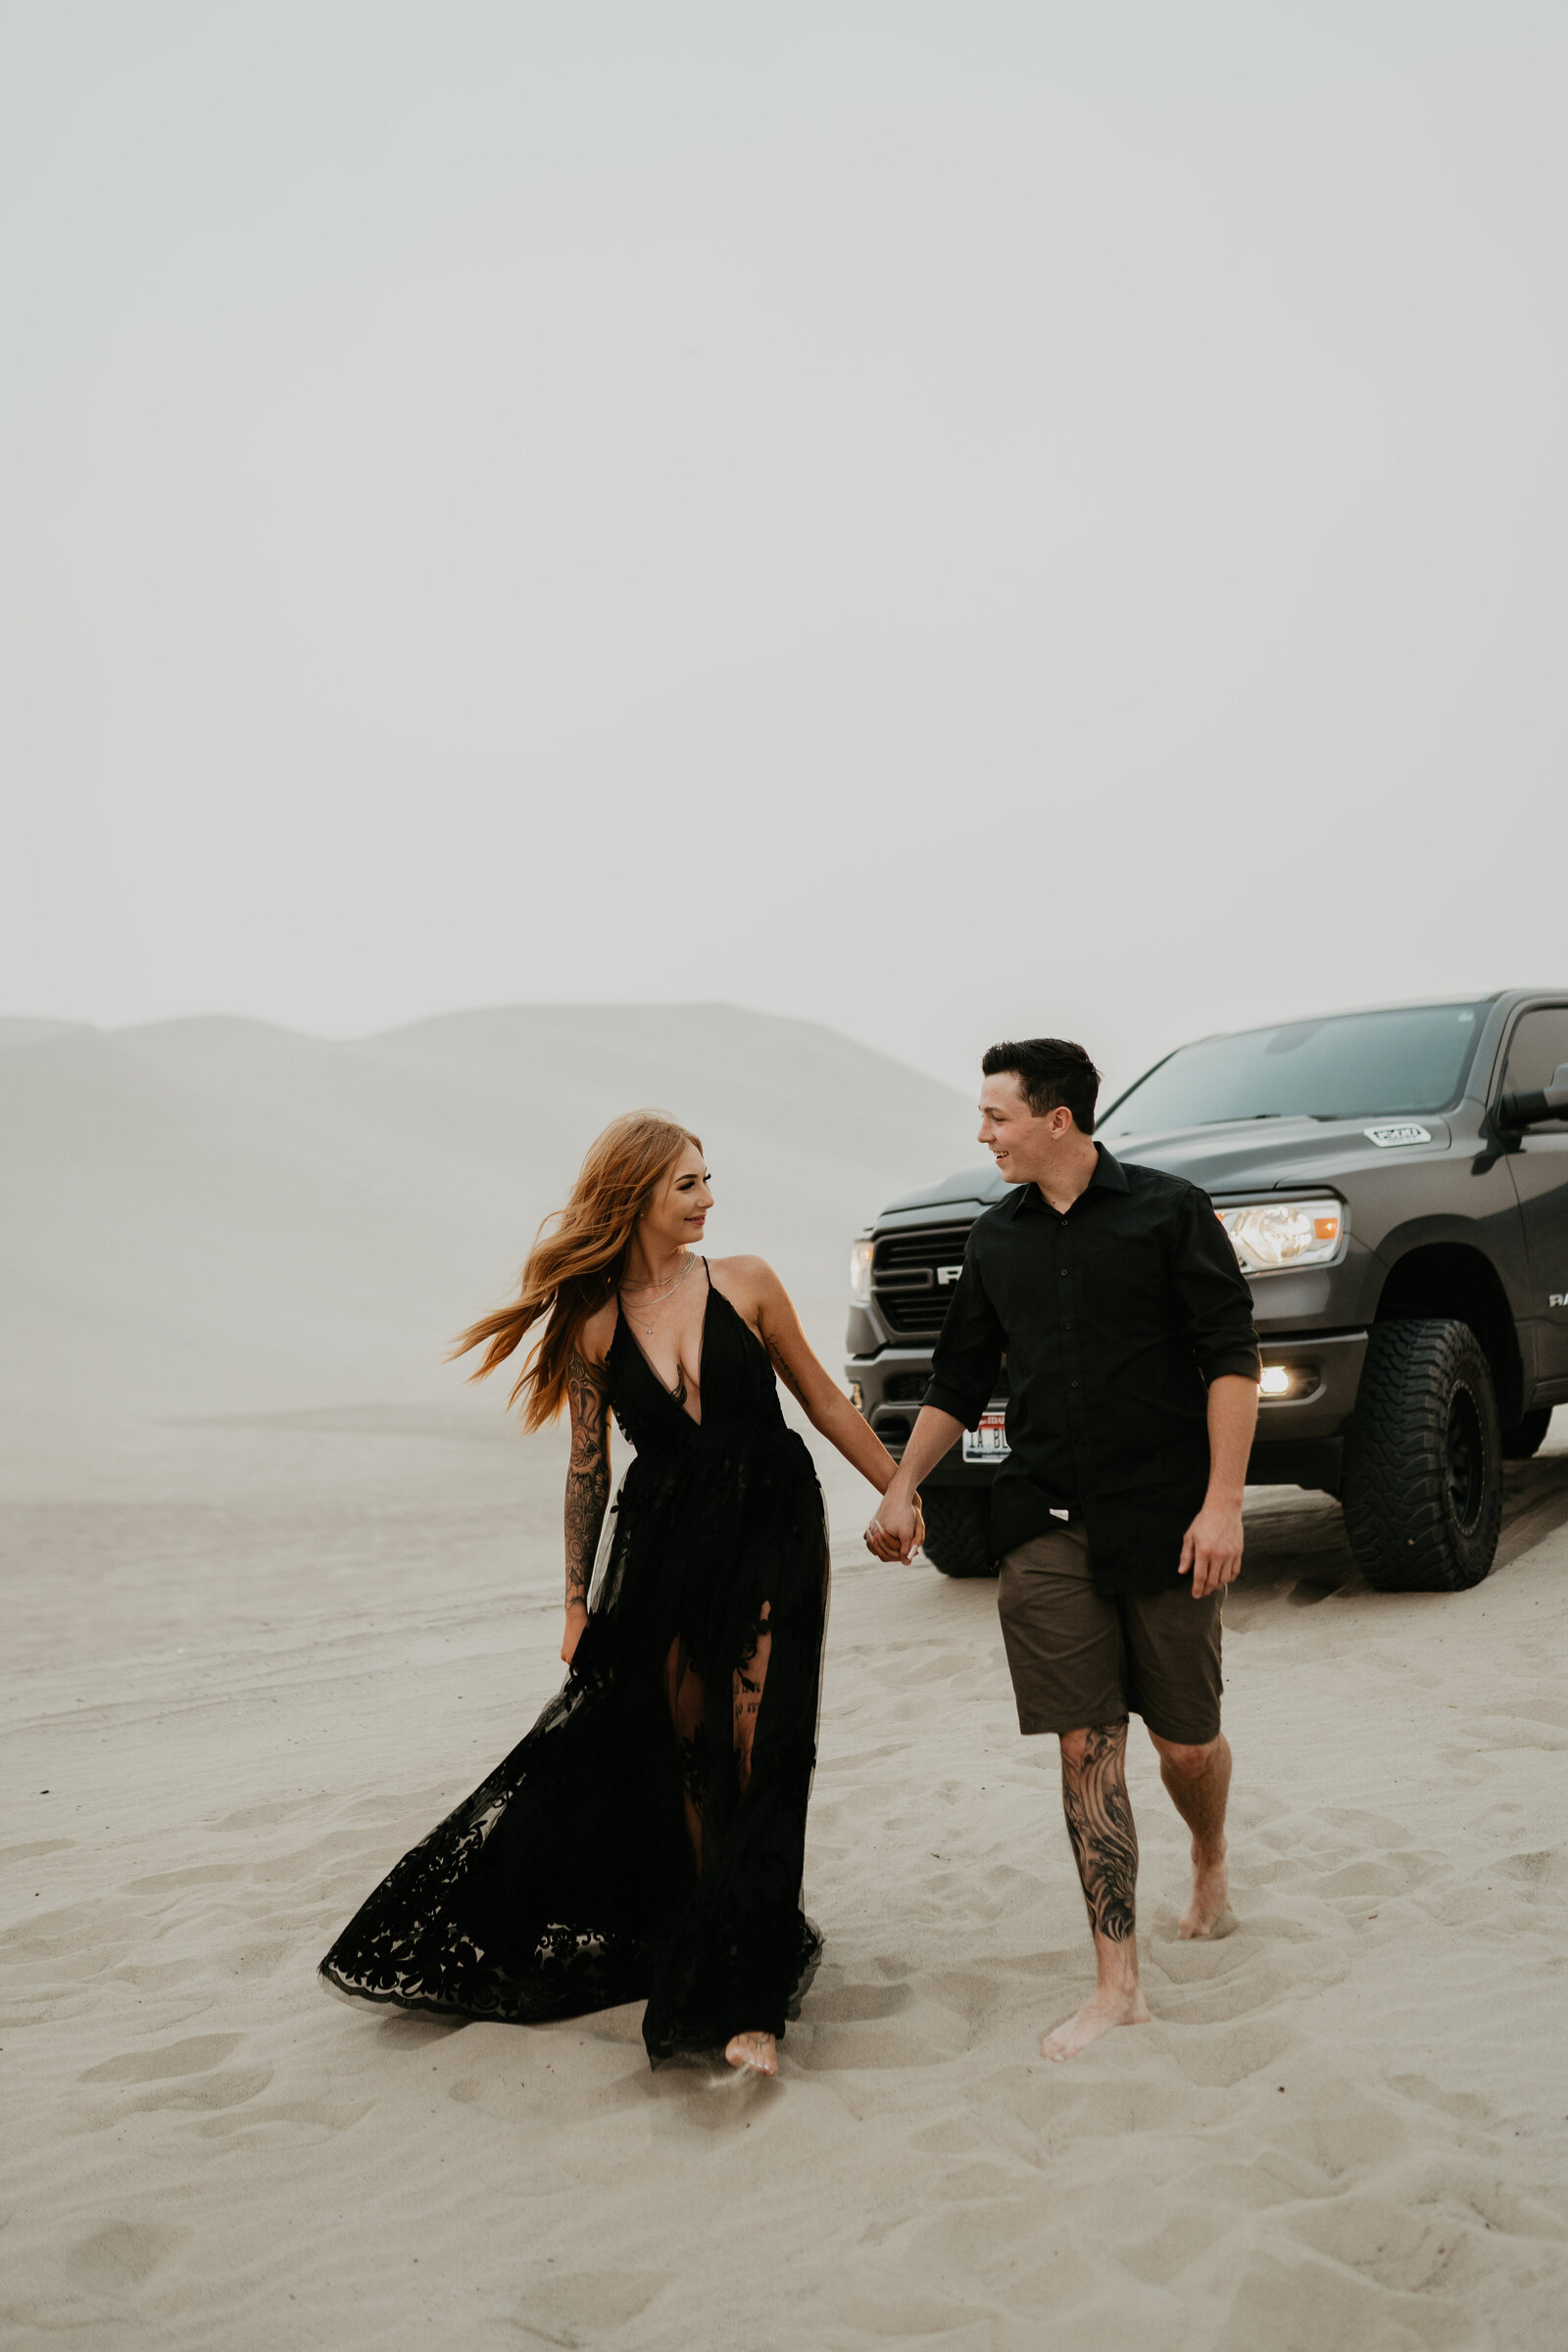 Sand Dunes Couples Photos - Raquel King Photography71